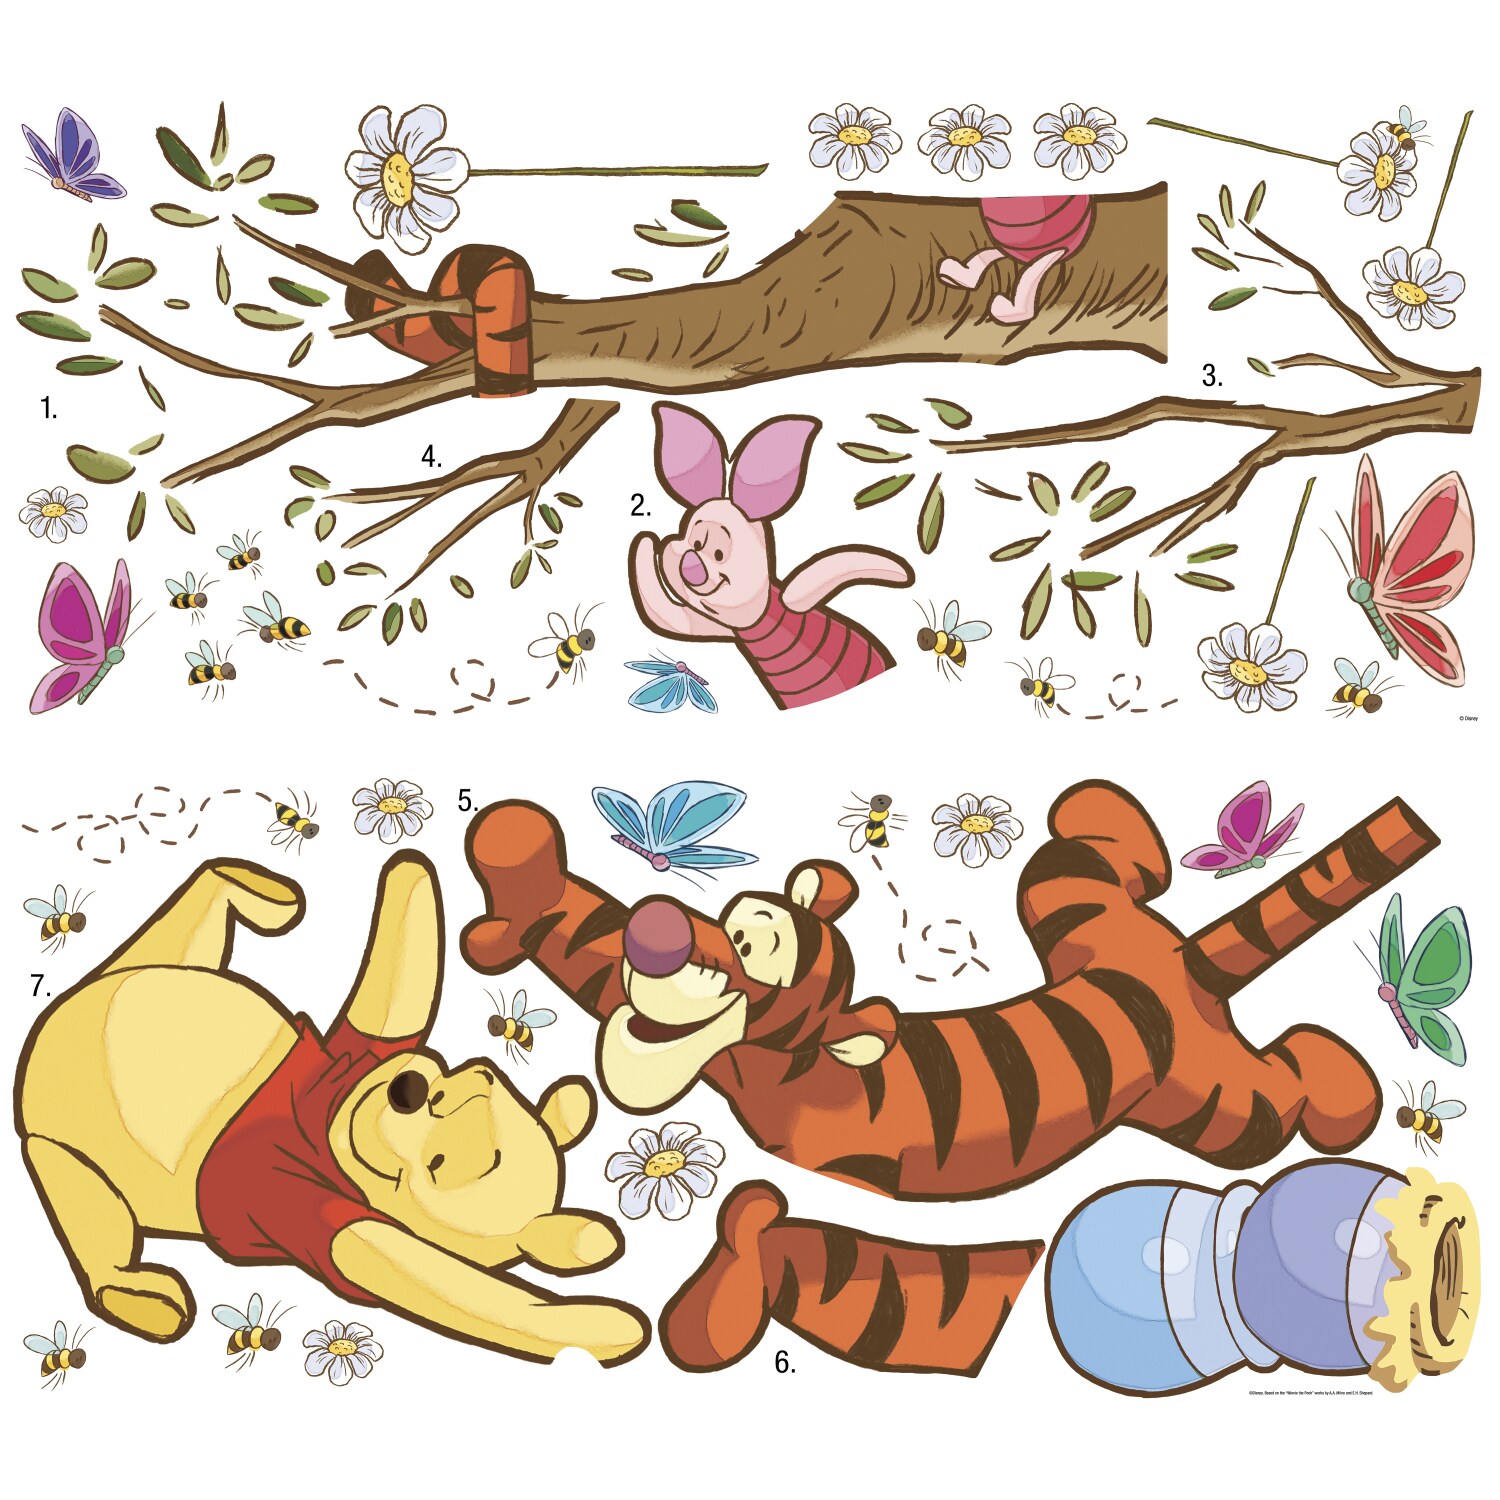 Lambs & Ivy Disney Baby Storytime Pooh Wall Decals / Stickers Winnie the  Pooh/Piglet/Tigger/Eeyore - Bed Bath & Beyond - 32831736